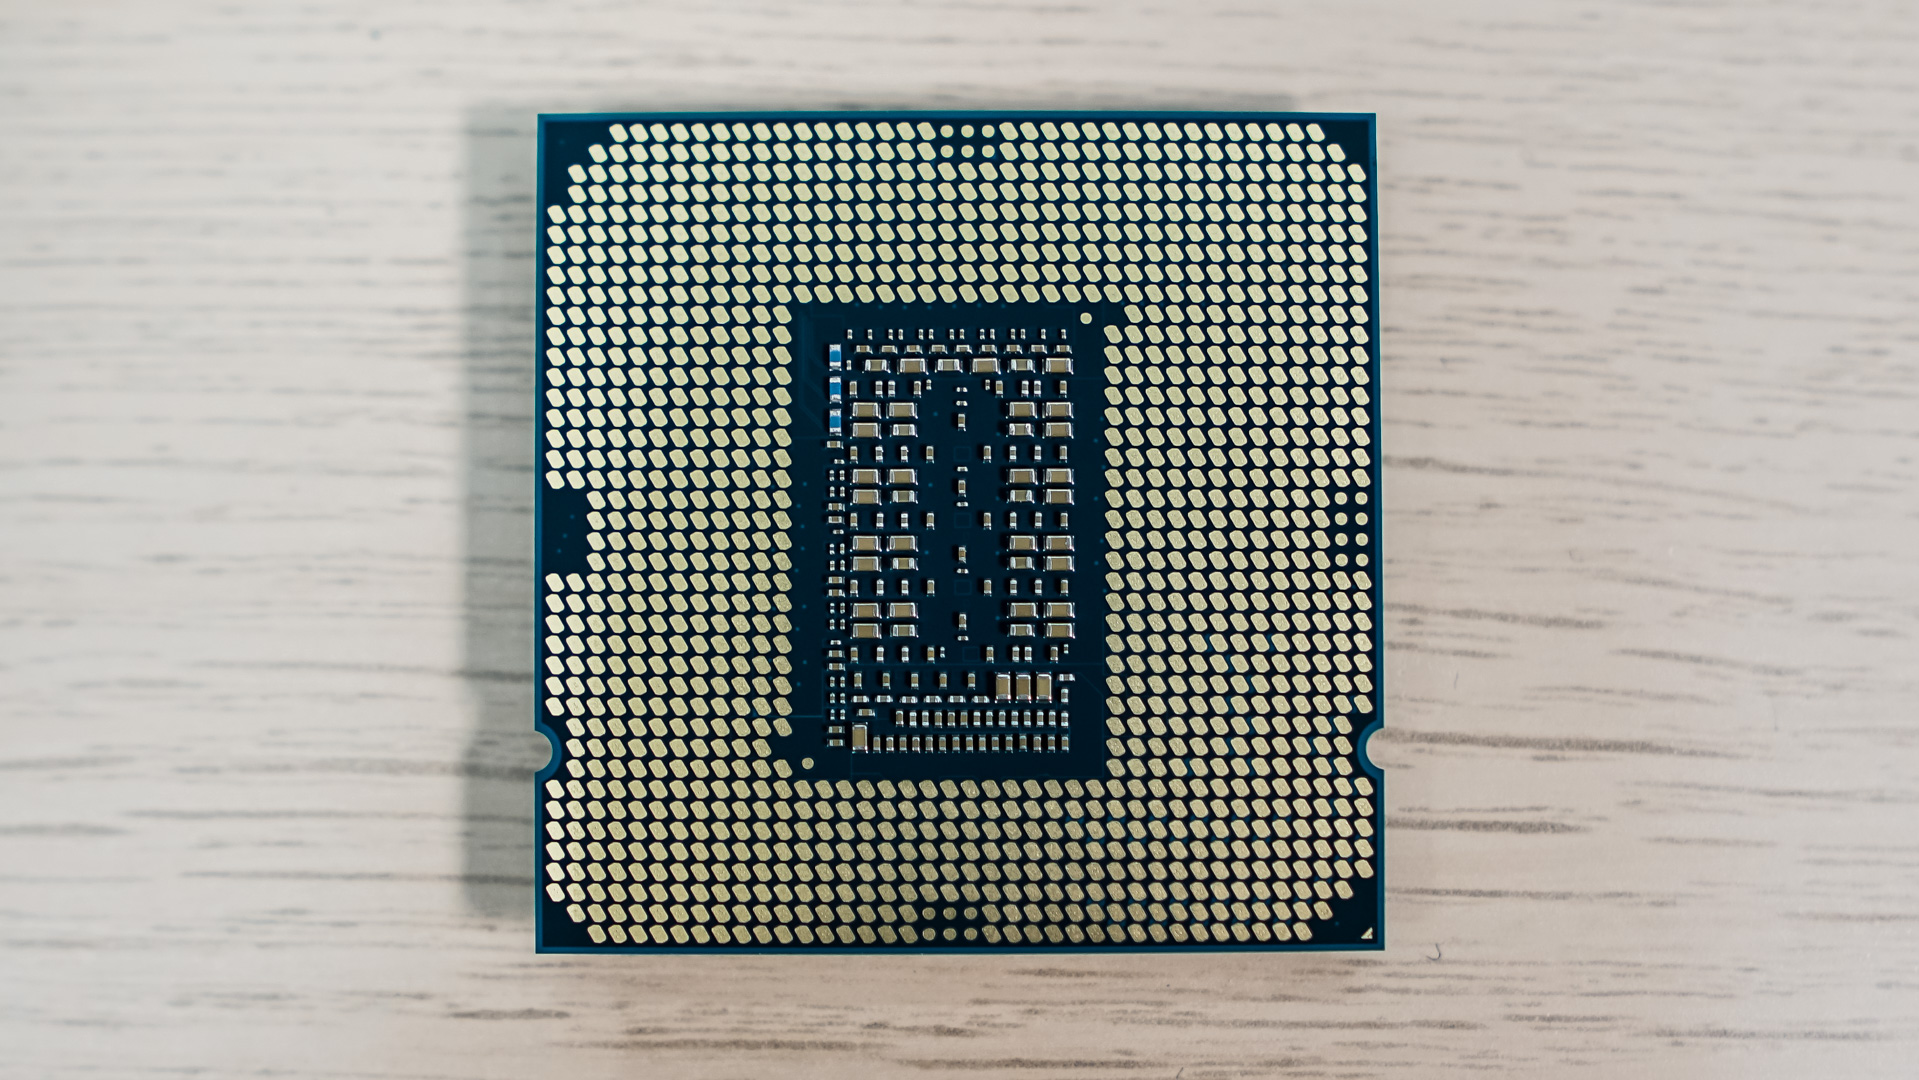 Intel Core i5 11600K